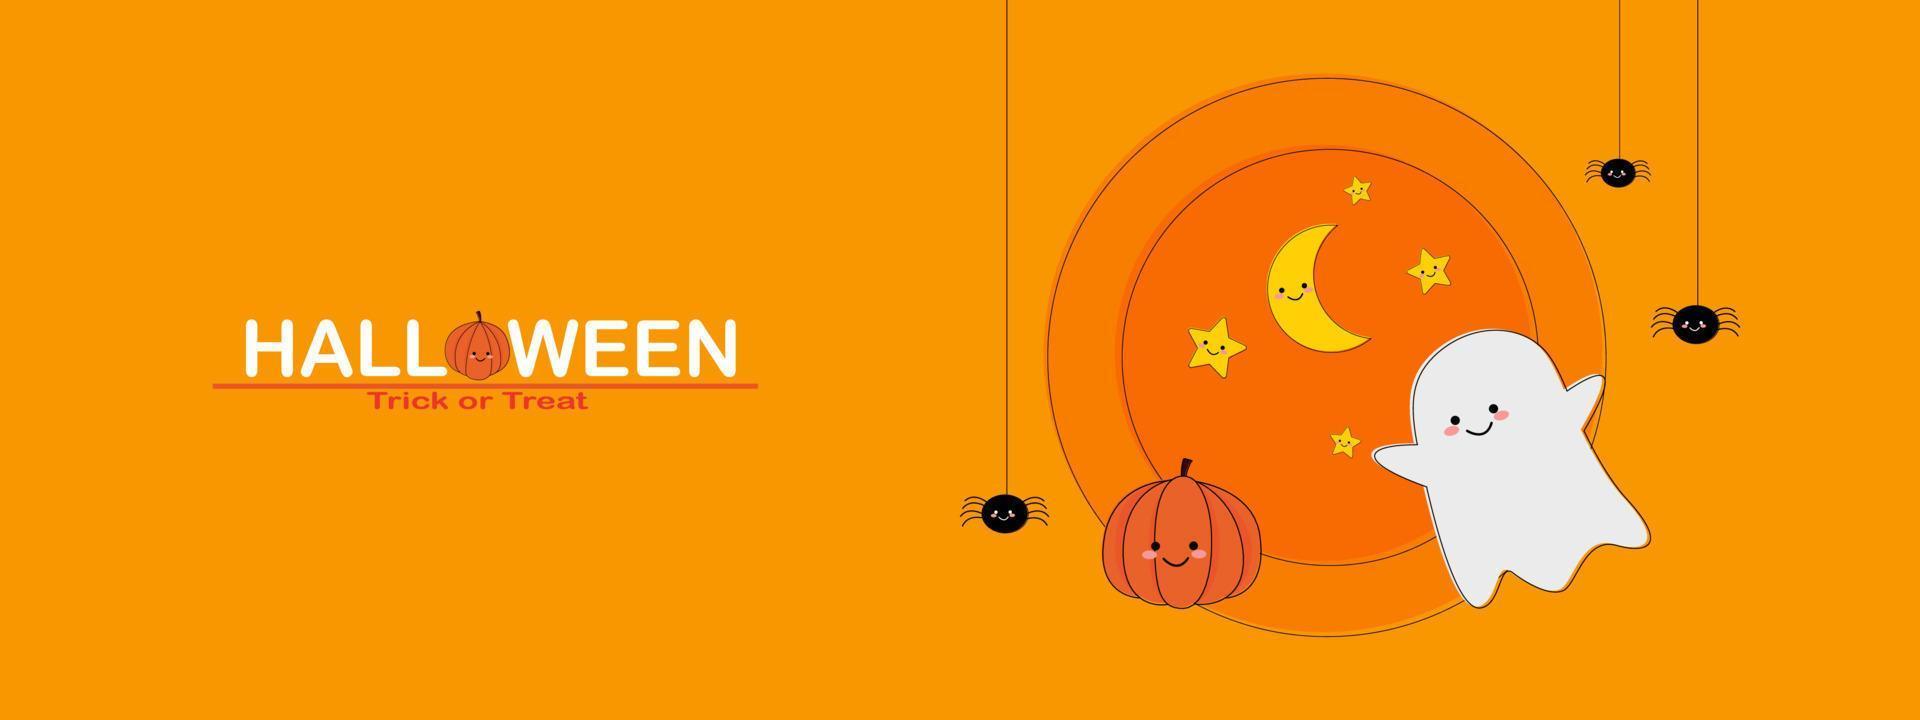 Happy Halloween banner or party invitation background. Halloween on orange background. Cute ghost pumpkin candy spider vector